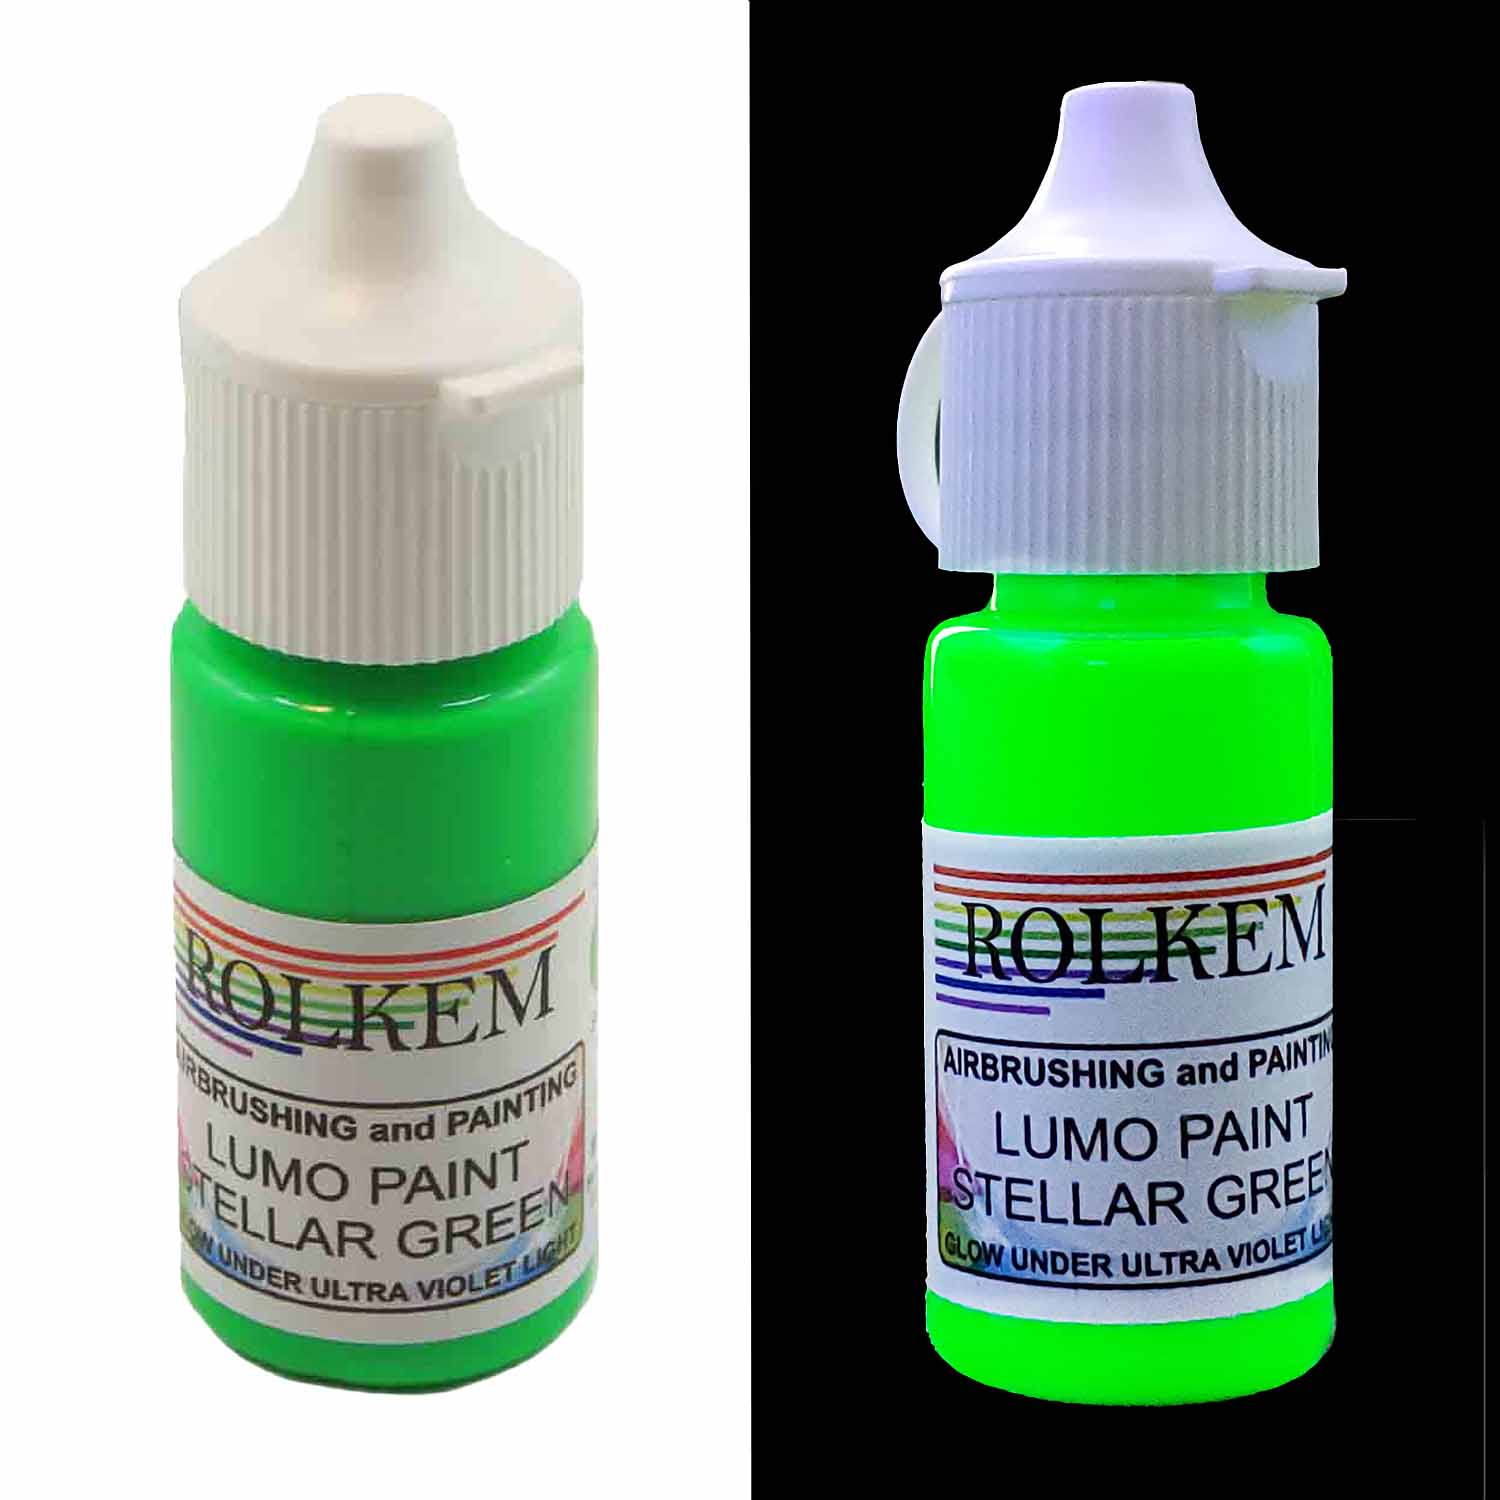 Green Rolkem Lumo Powder Food Coloring